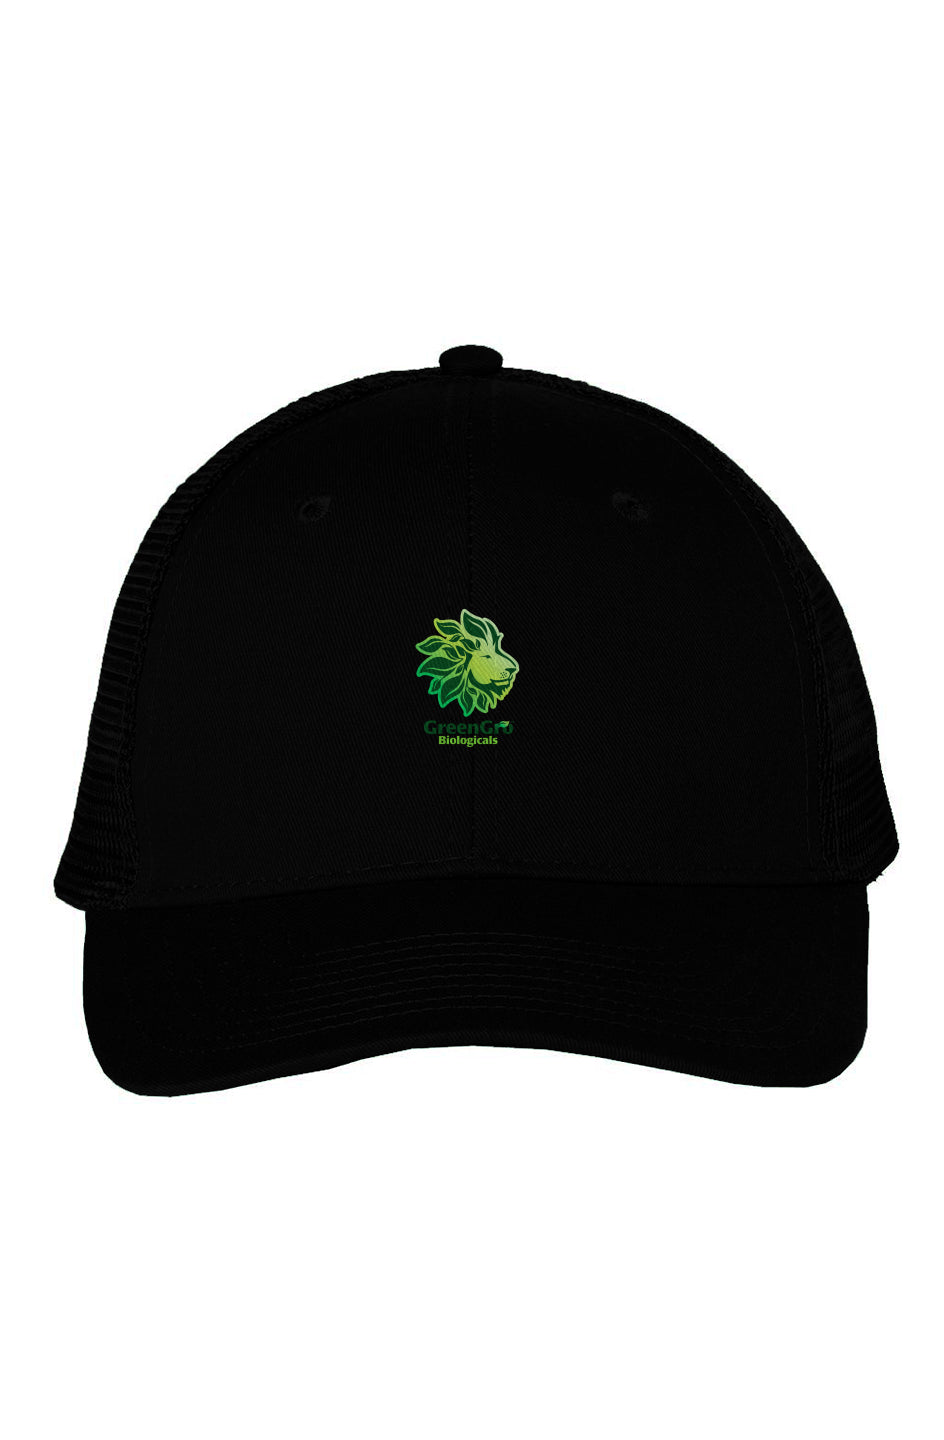 Mesh-Back Twill Trucker Cap- Green stacked logo